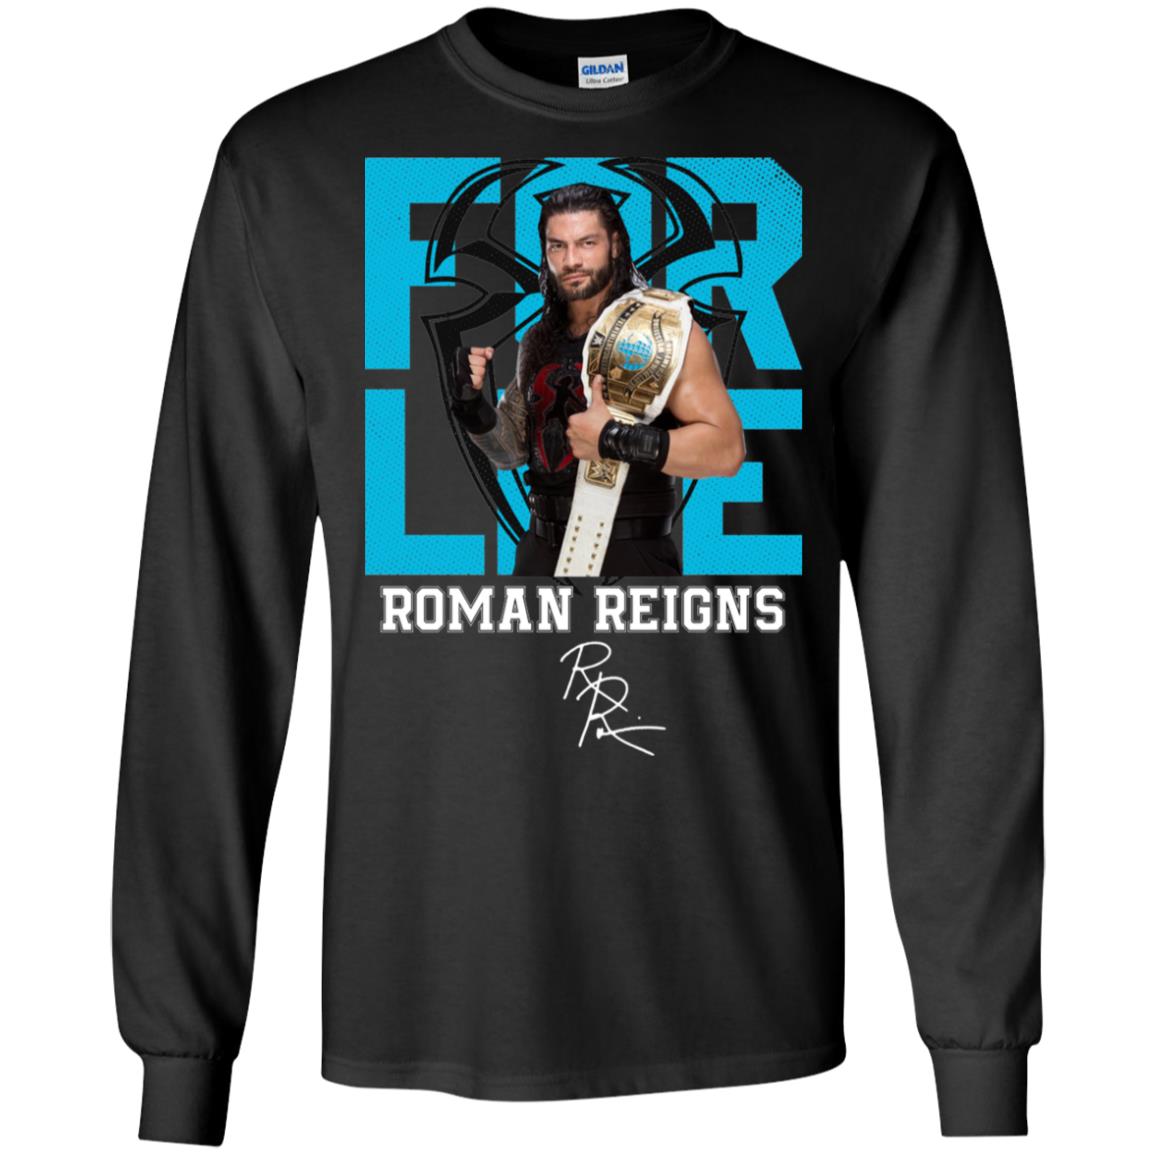 For Life Roman Reigns shirt, hoodie, long sleeve, ladies tee